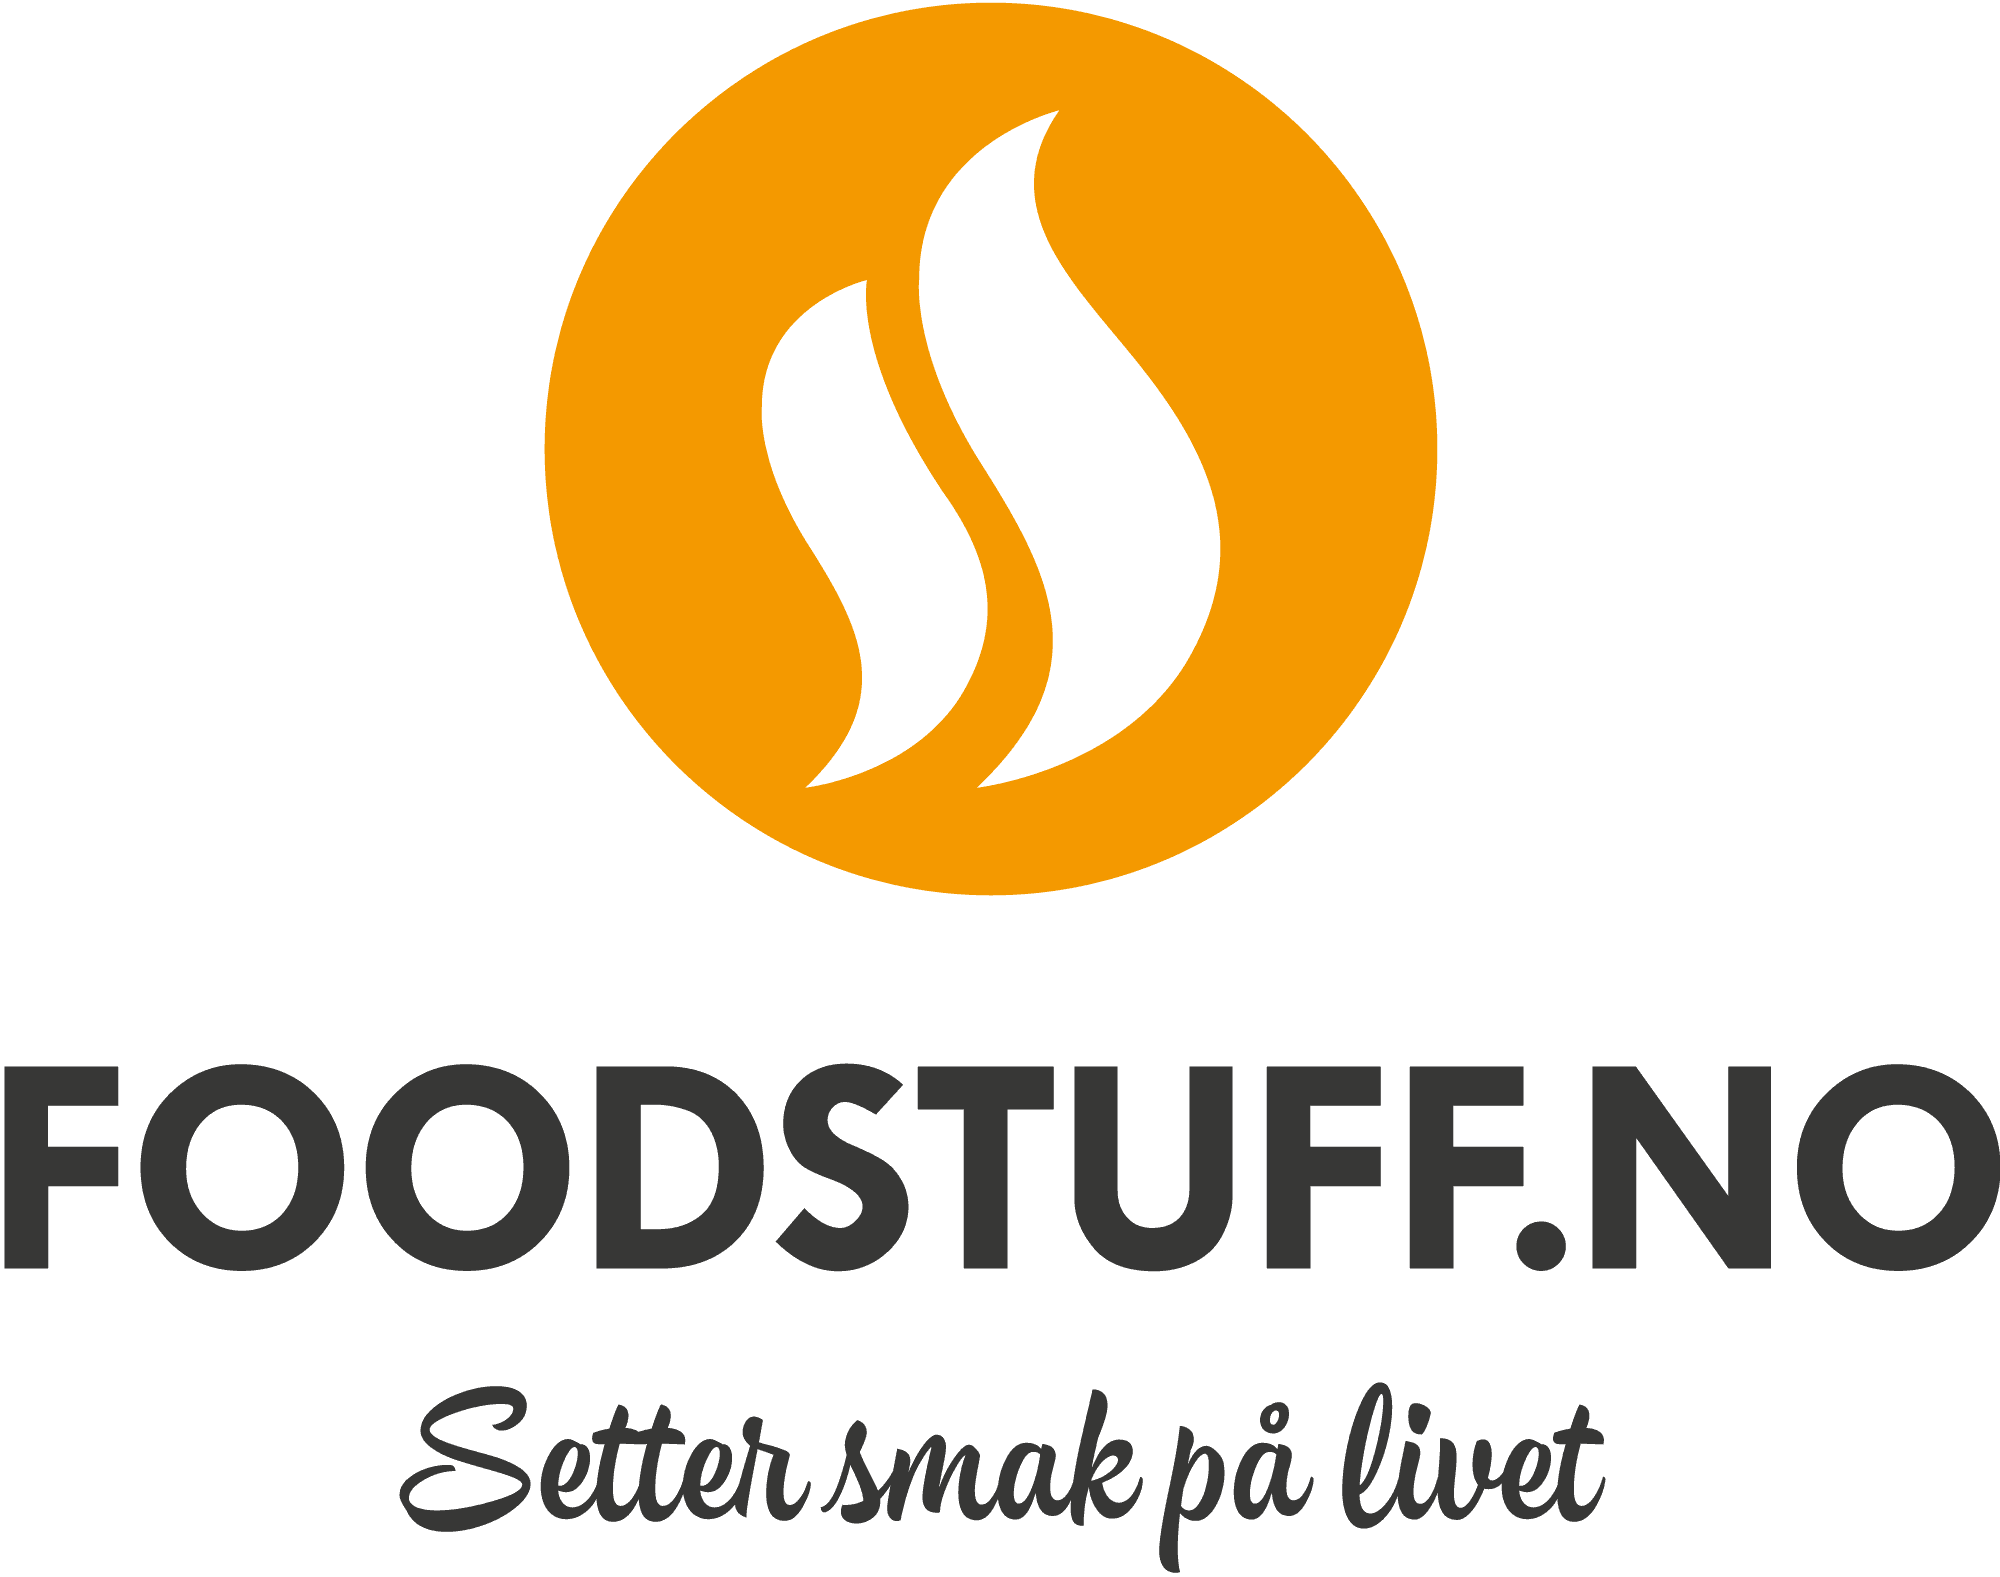 Foodstuff logo Black Friday